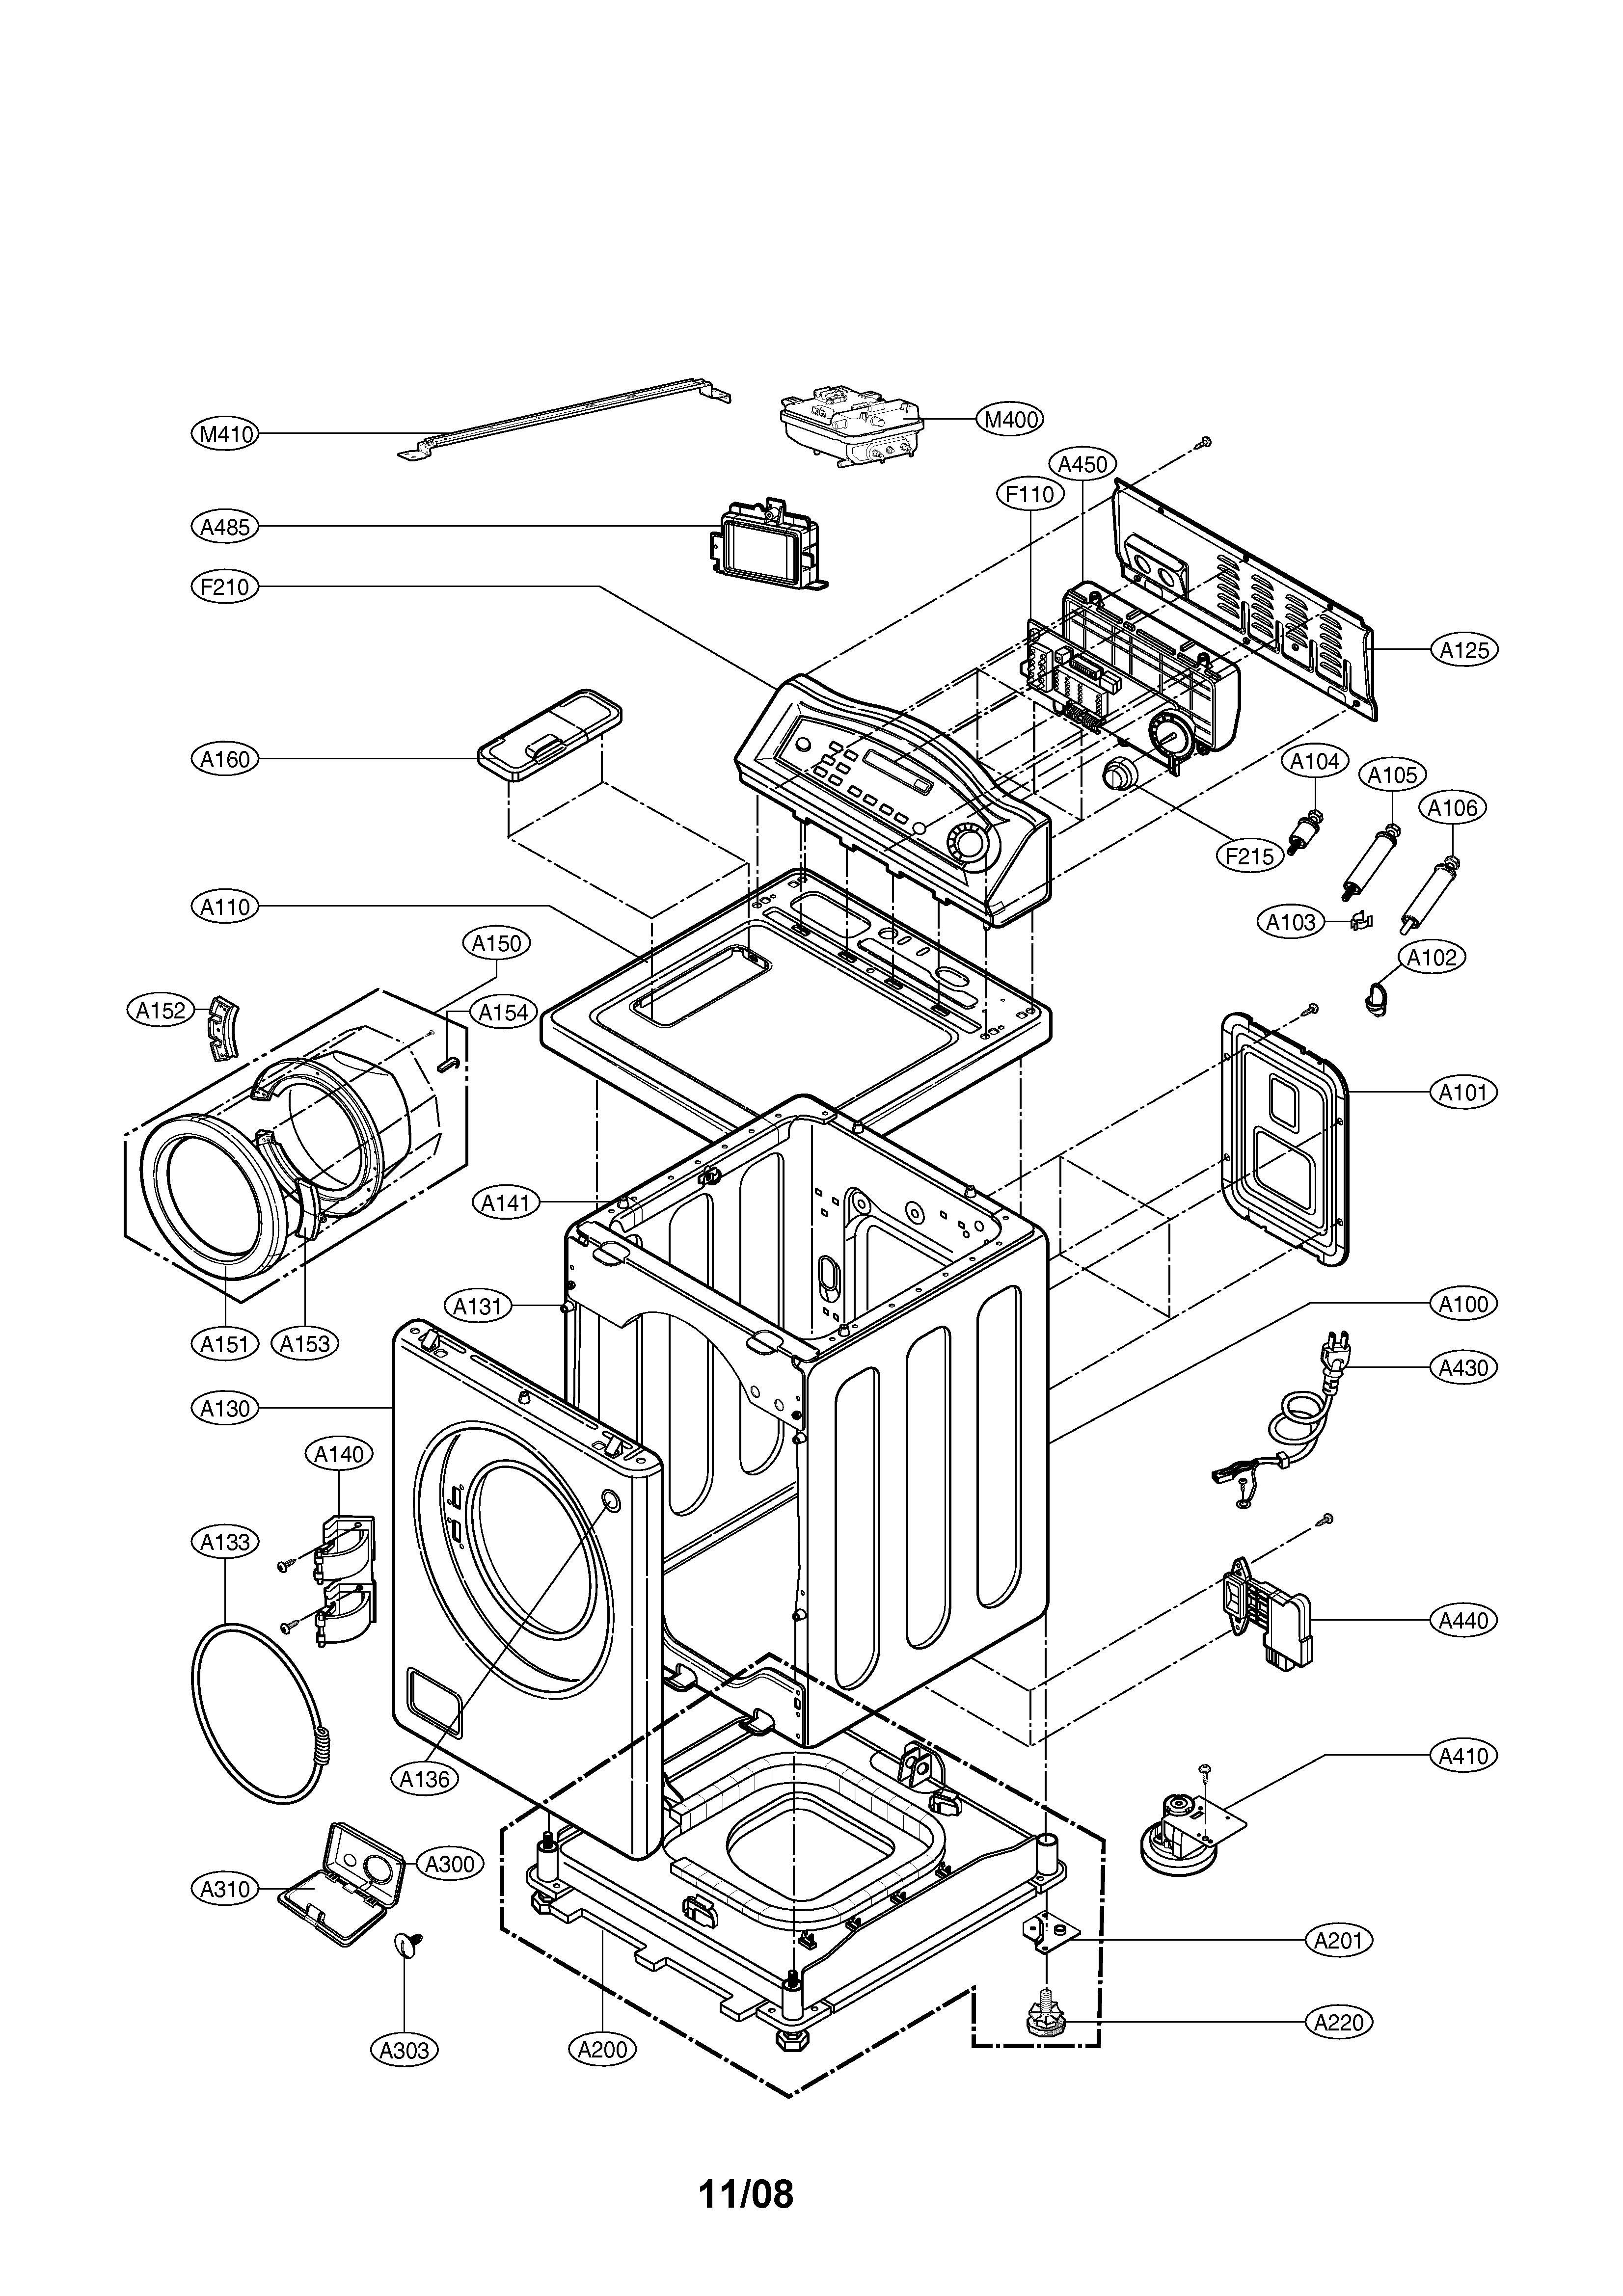 LG WASHER Parts | Model WM0742HWA | Sears PartsDirect